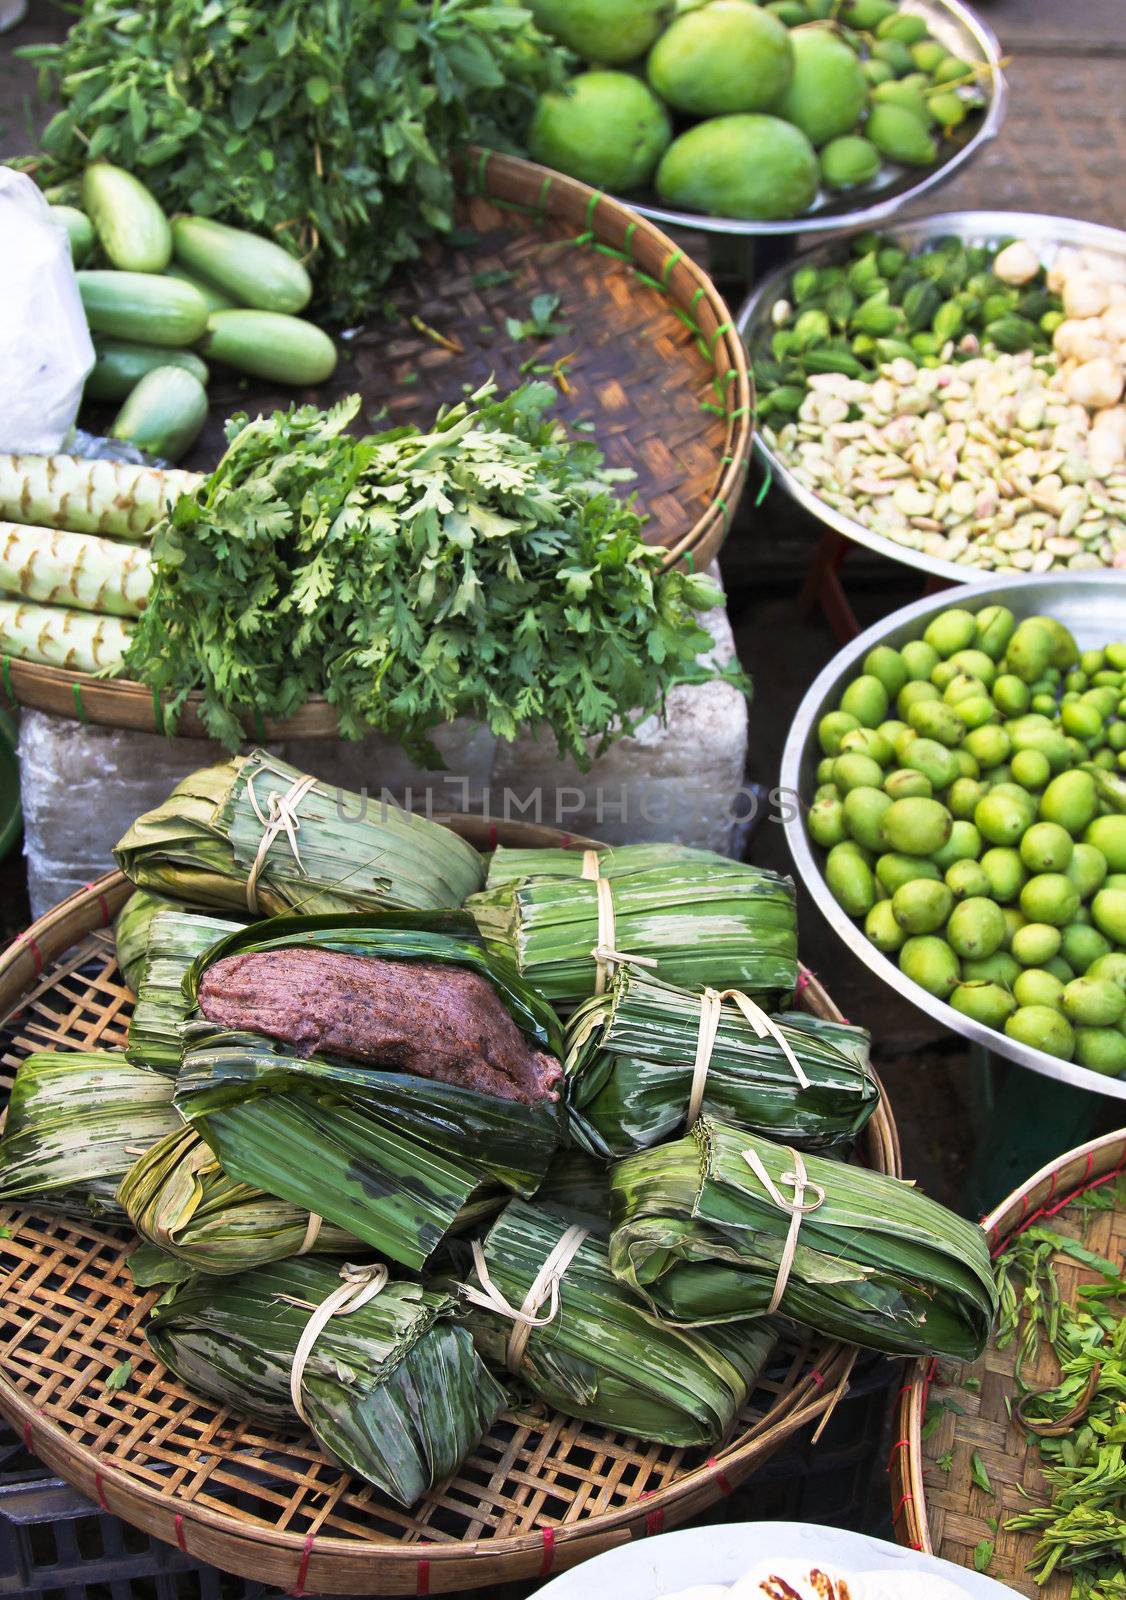 Market in Yangon,Burma by vanillaechoes